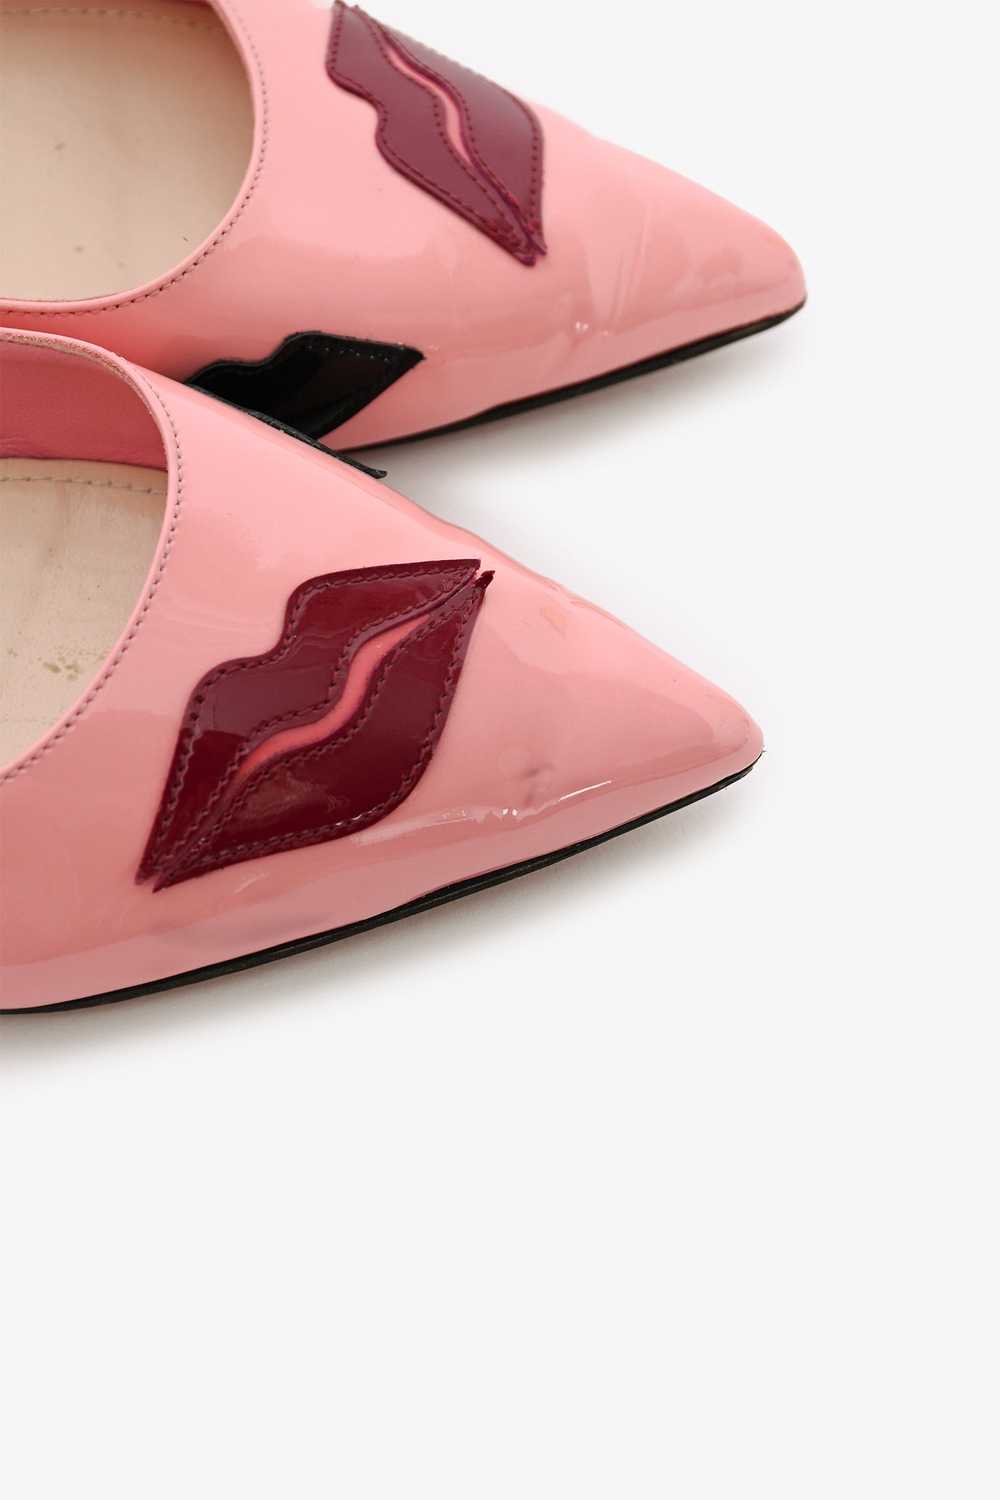 Prada Pink Patent Leather Kiss Print Flats Size 36 - image 5